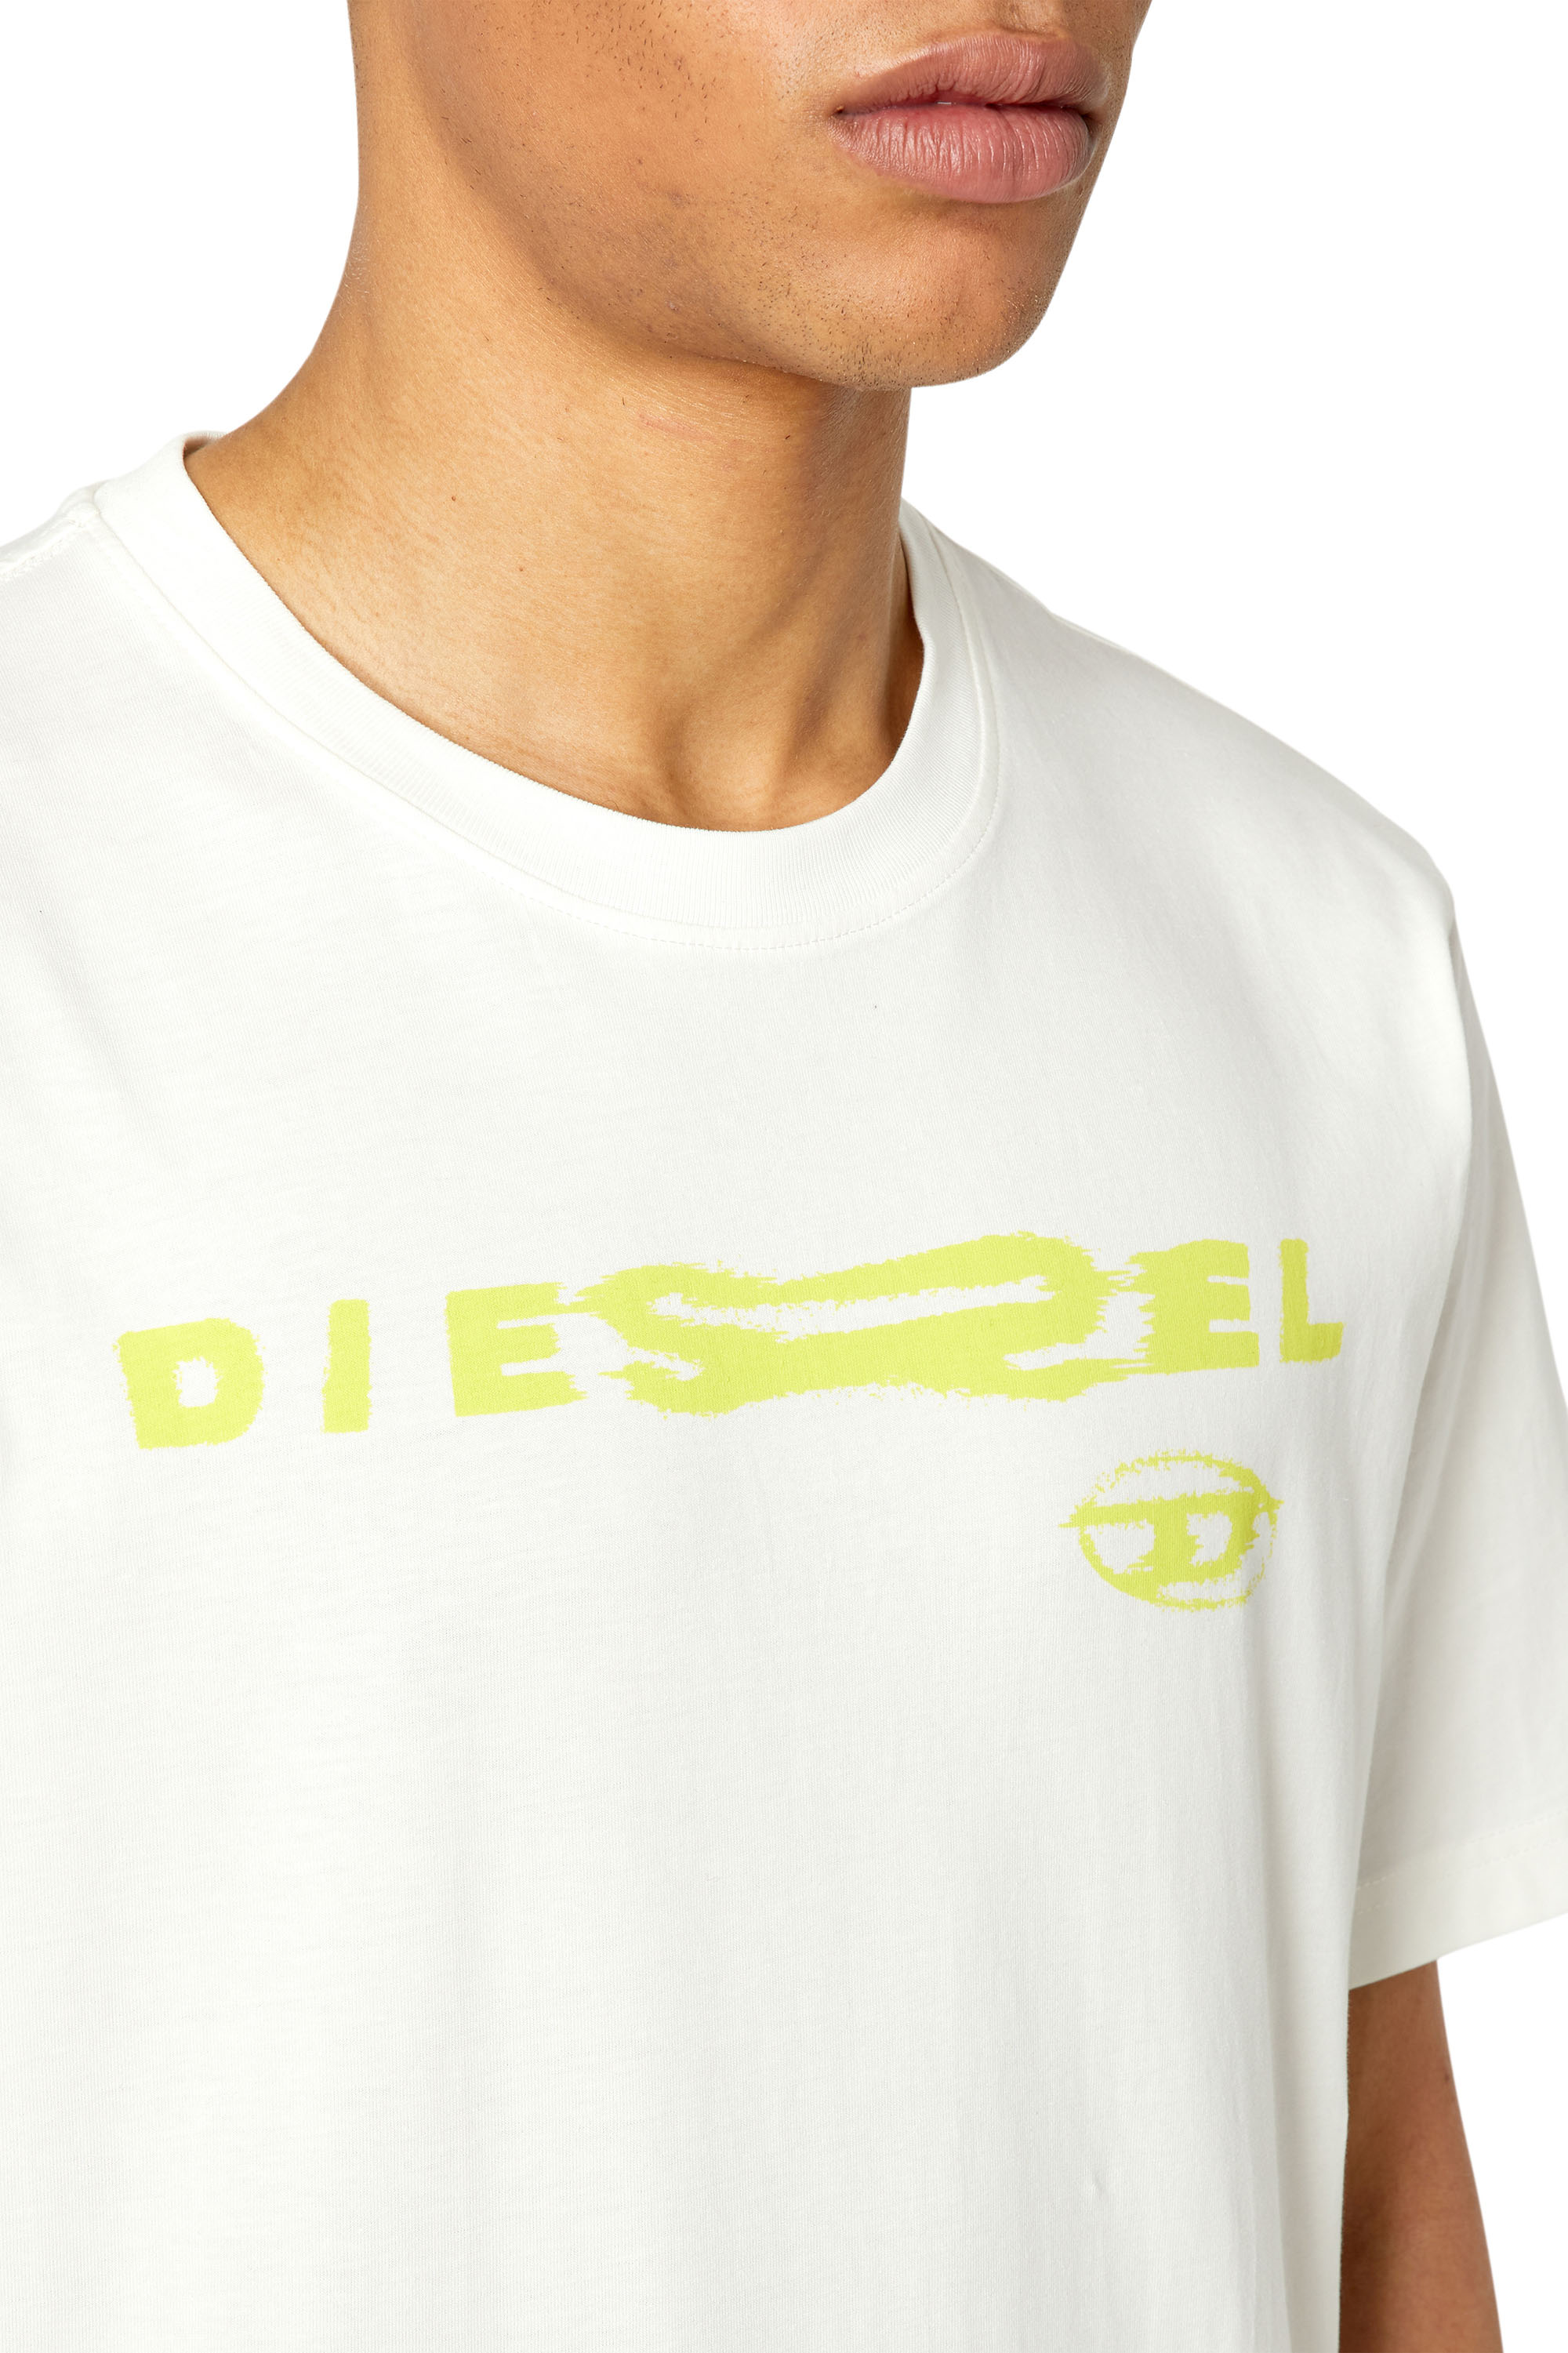 Diesel - T-JUST-G9, White - Image 3